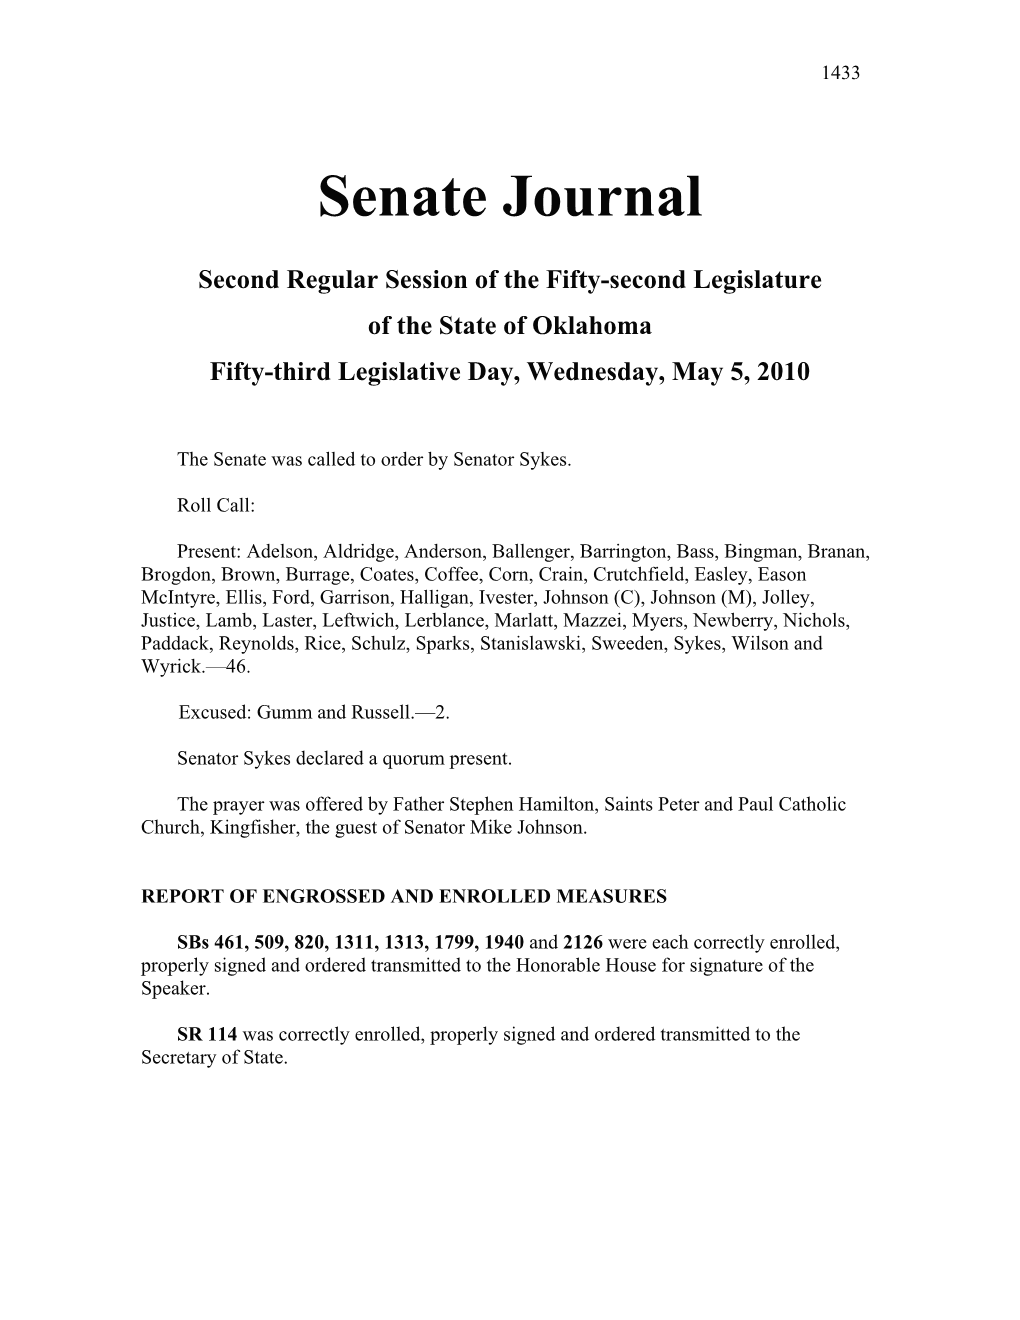 Senate Journal May 05, 2010